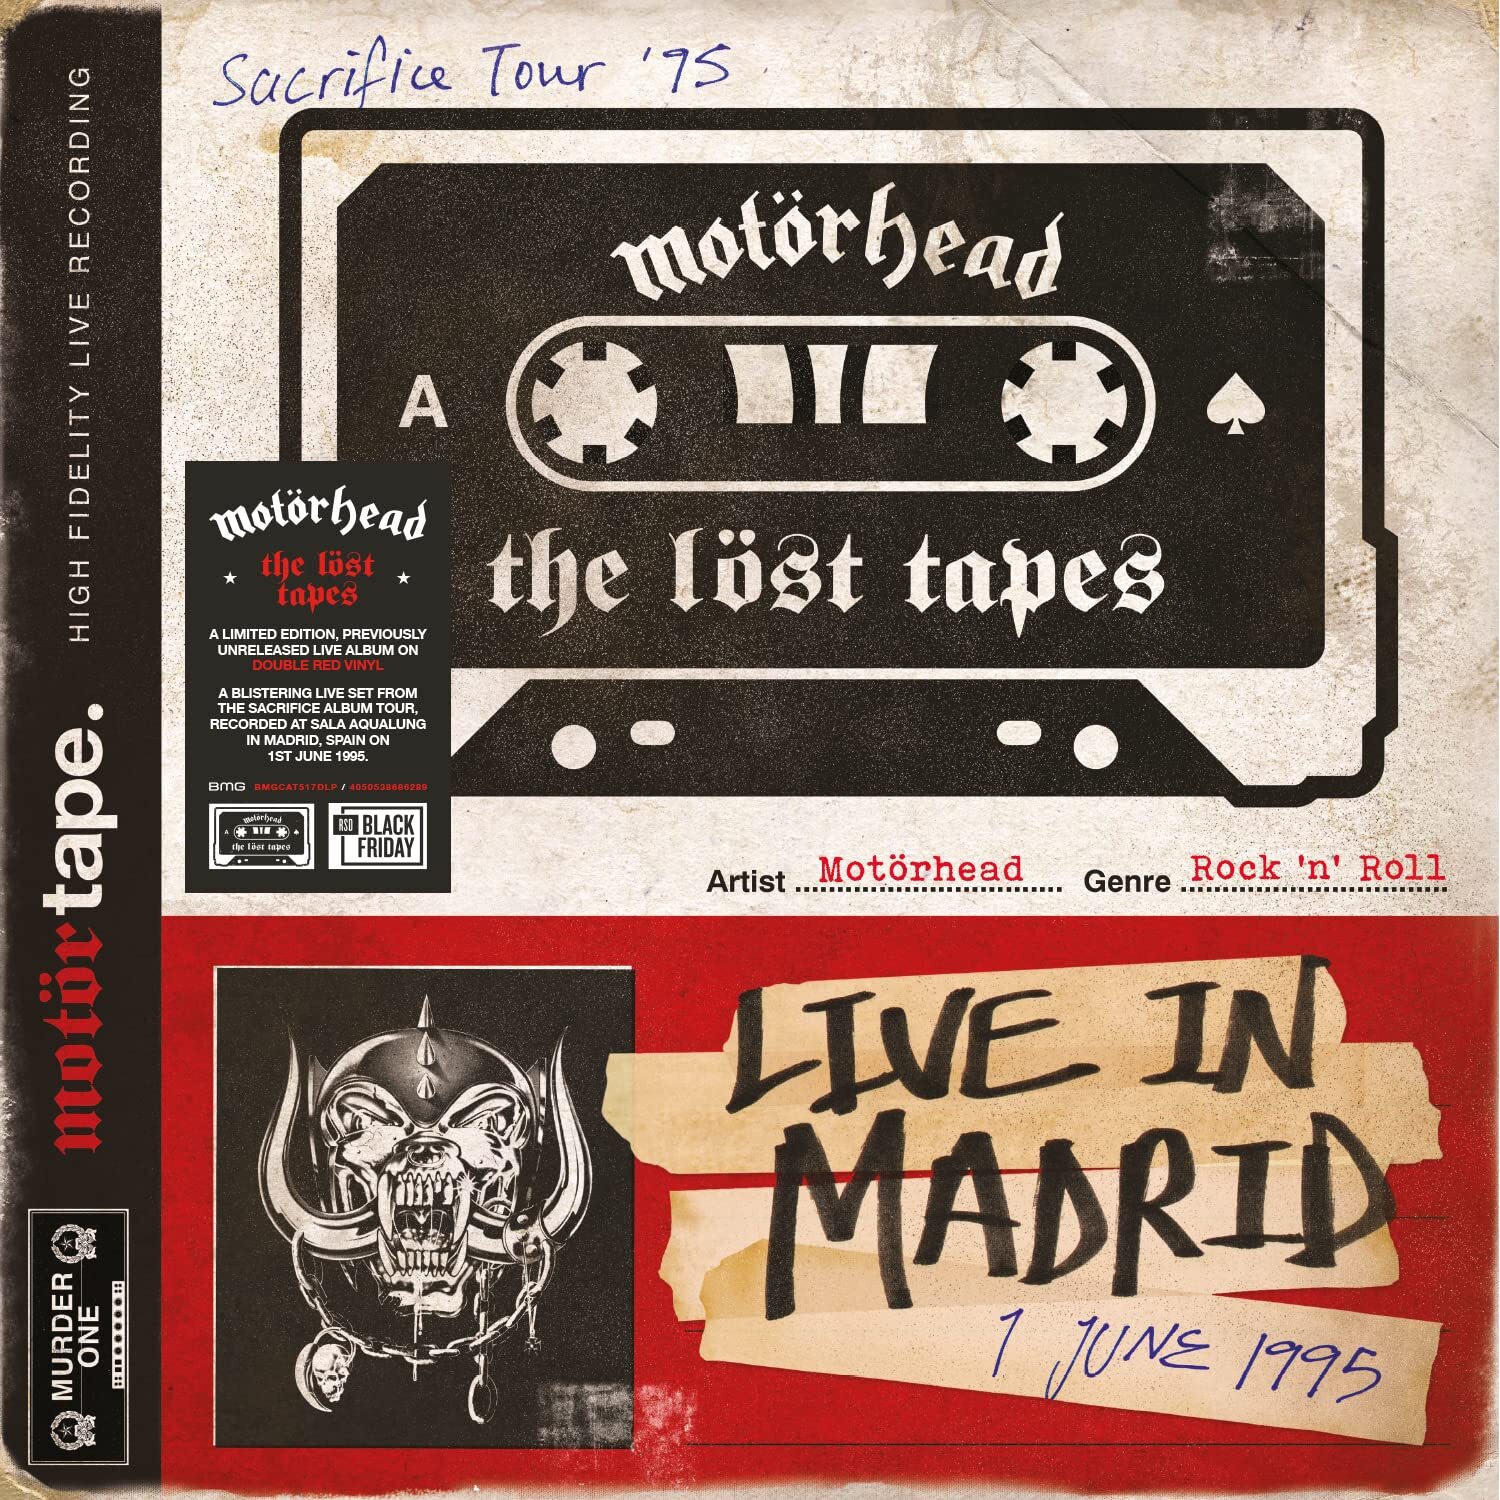 Рок Warner Music Motorhead - The Lost Tapes Vol. 1 Live In Madrid 1 June 1995 (Limited Edition Coloured Vinyl 2LP) хип хоп warner music busta rhymes when disaster strikes coloured vinyl 2lp